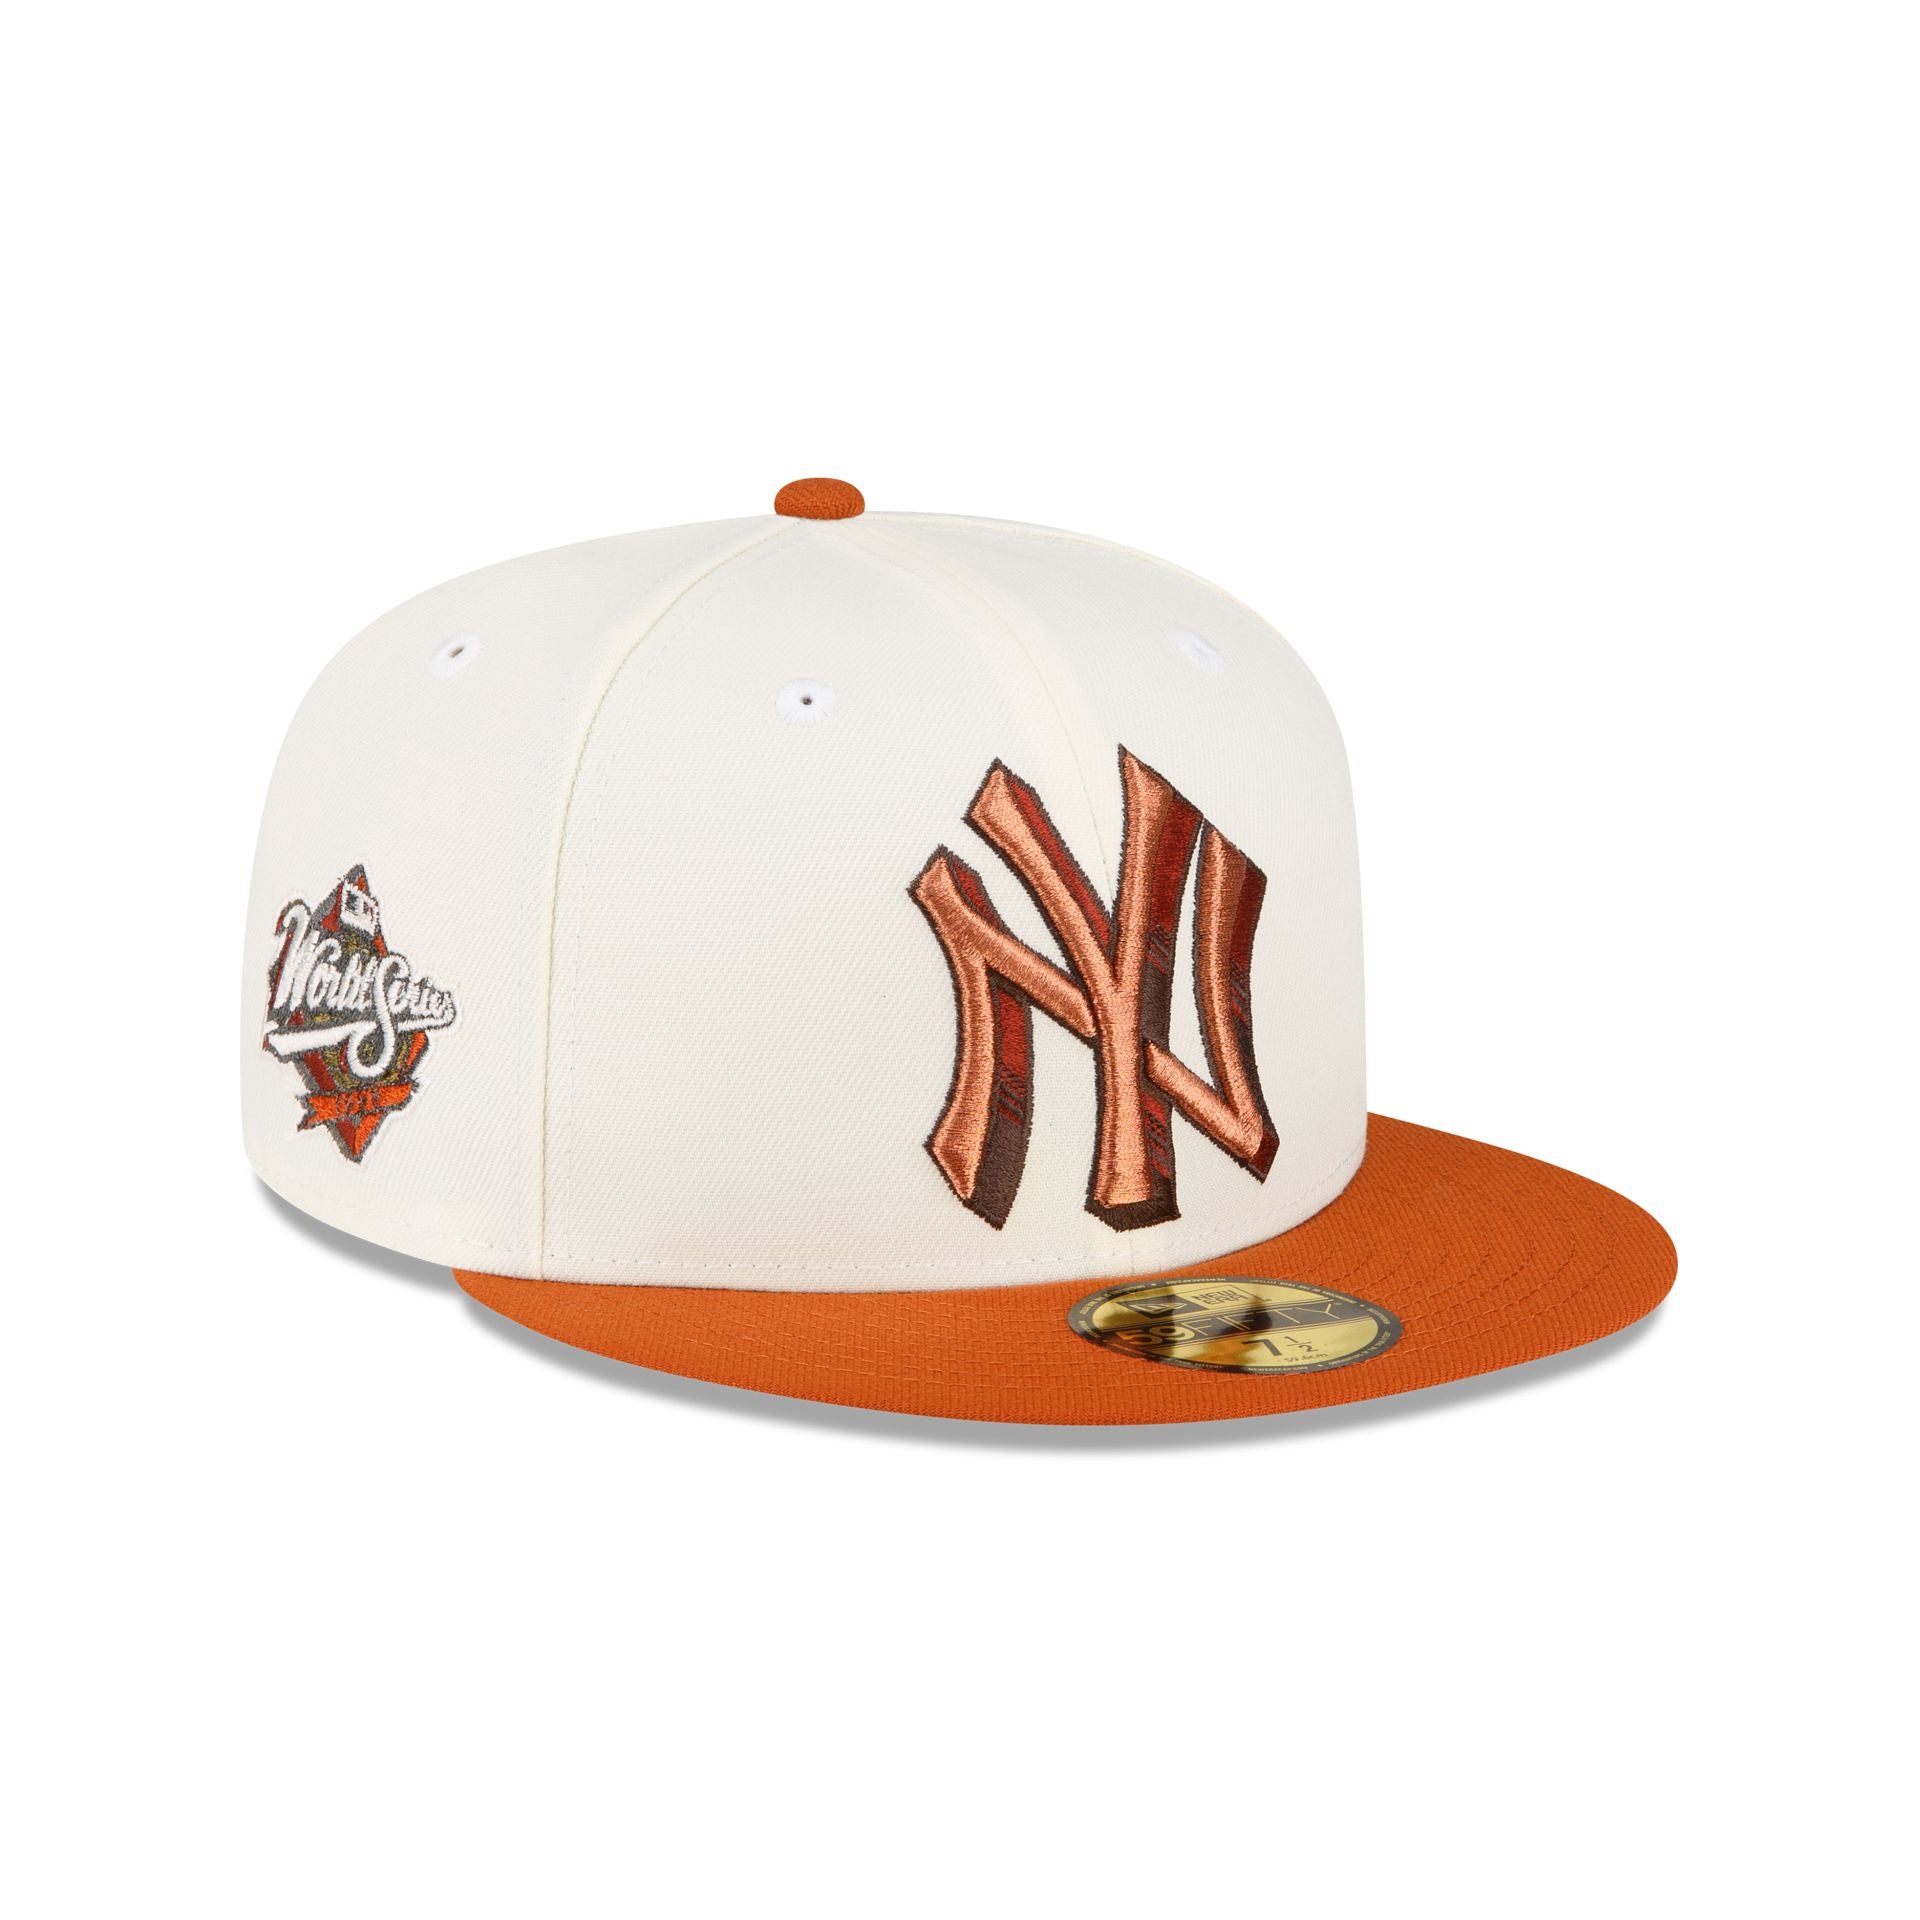 Orange Caps Cap York New New Yankees Era Rust Fitted Hat 59FIFTY Just –